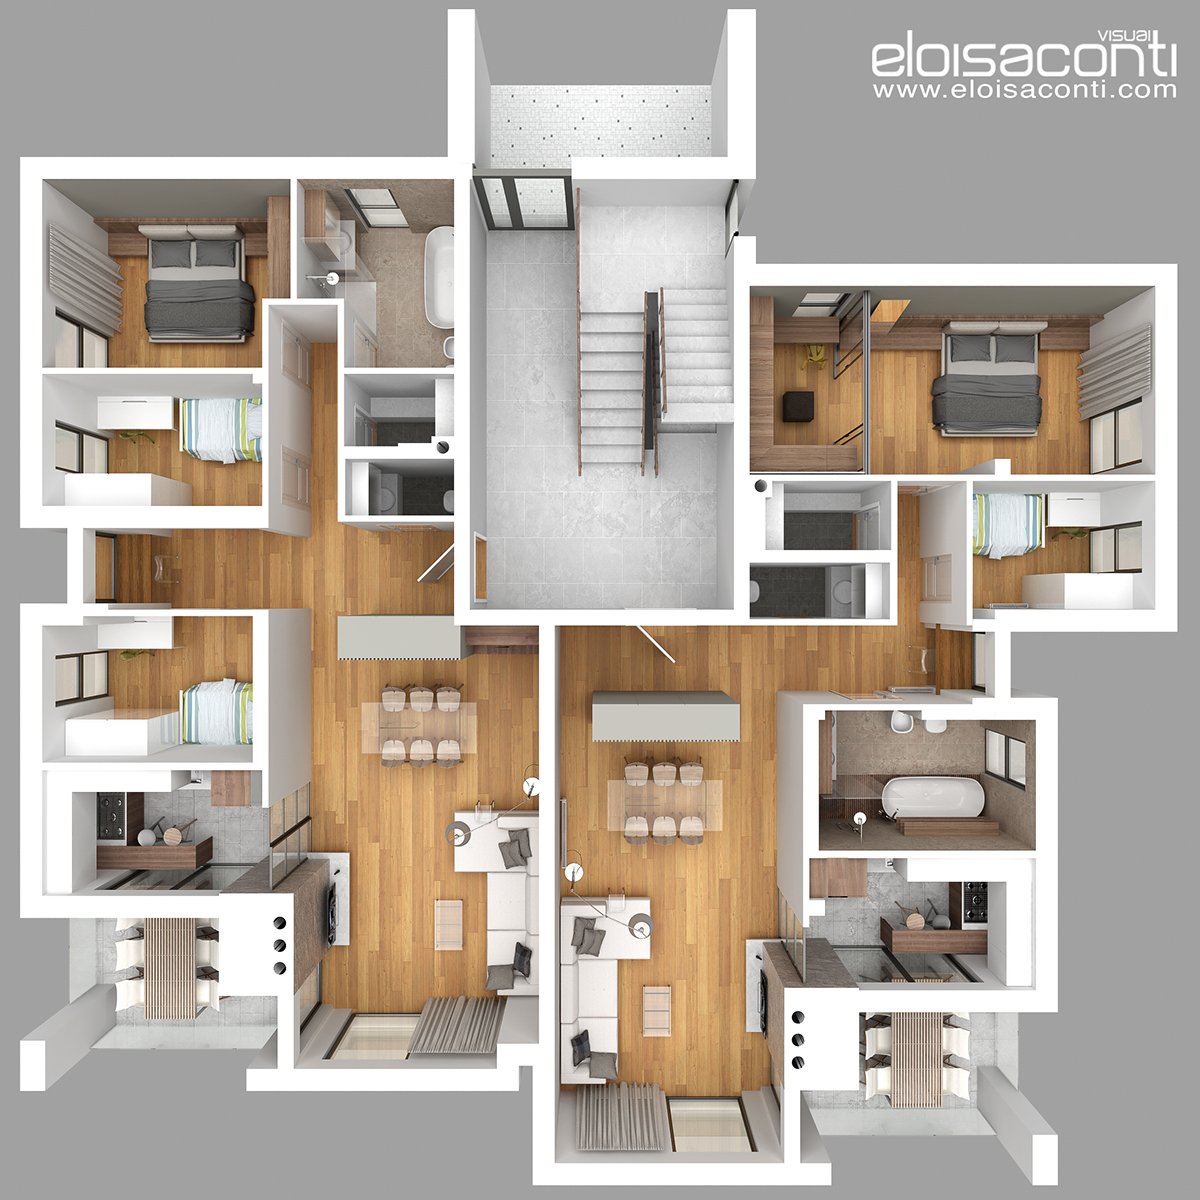 3D Render rendering CGI cg art cg artist CG cinema 4d vray living bedroom kitchen exterior Interior bathroom